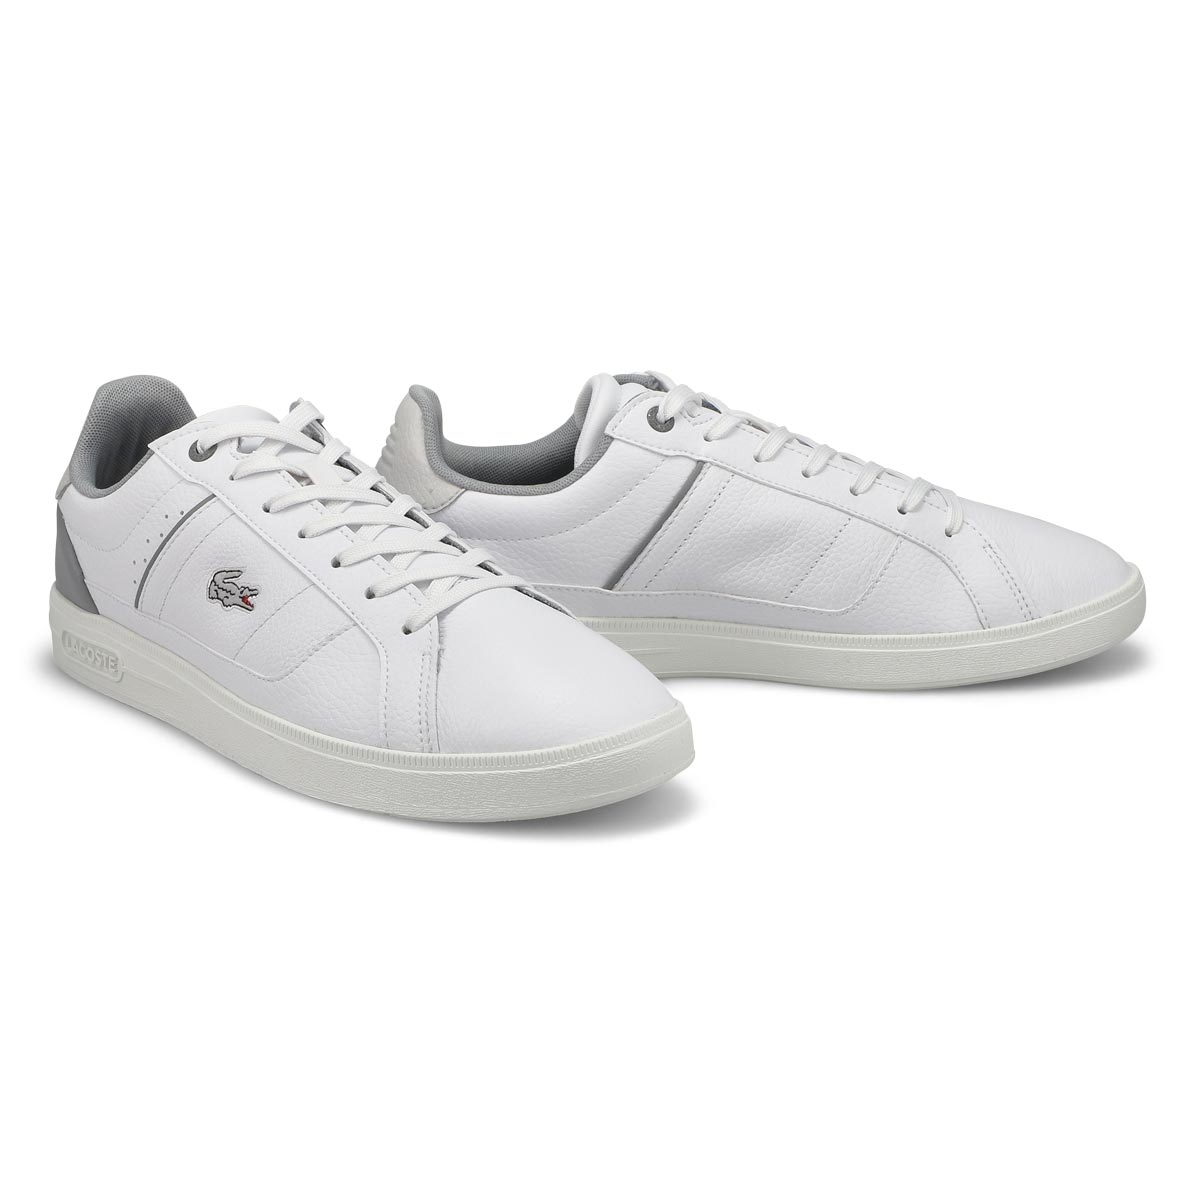 Lacoste Men's Europa Pro Sneaker - White/Grey | SoftMoc.com